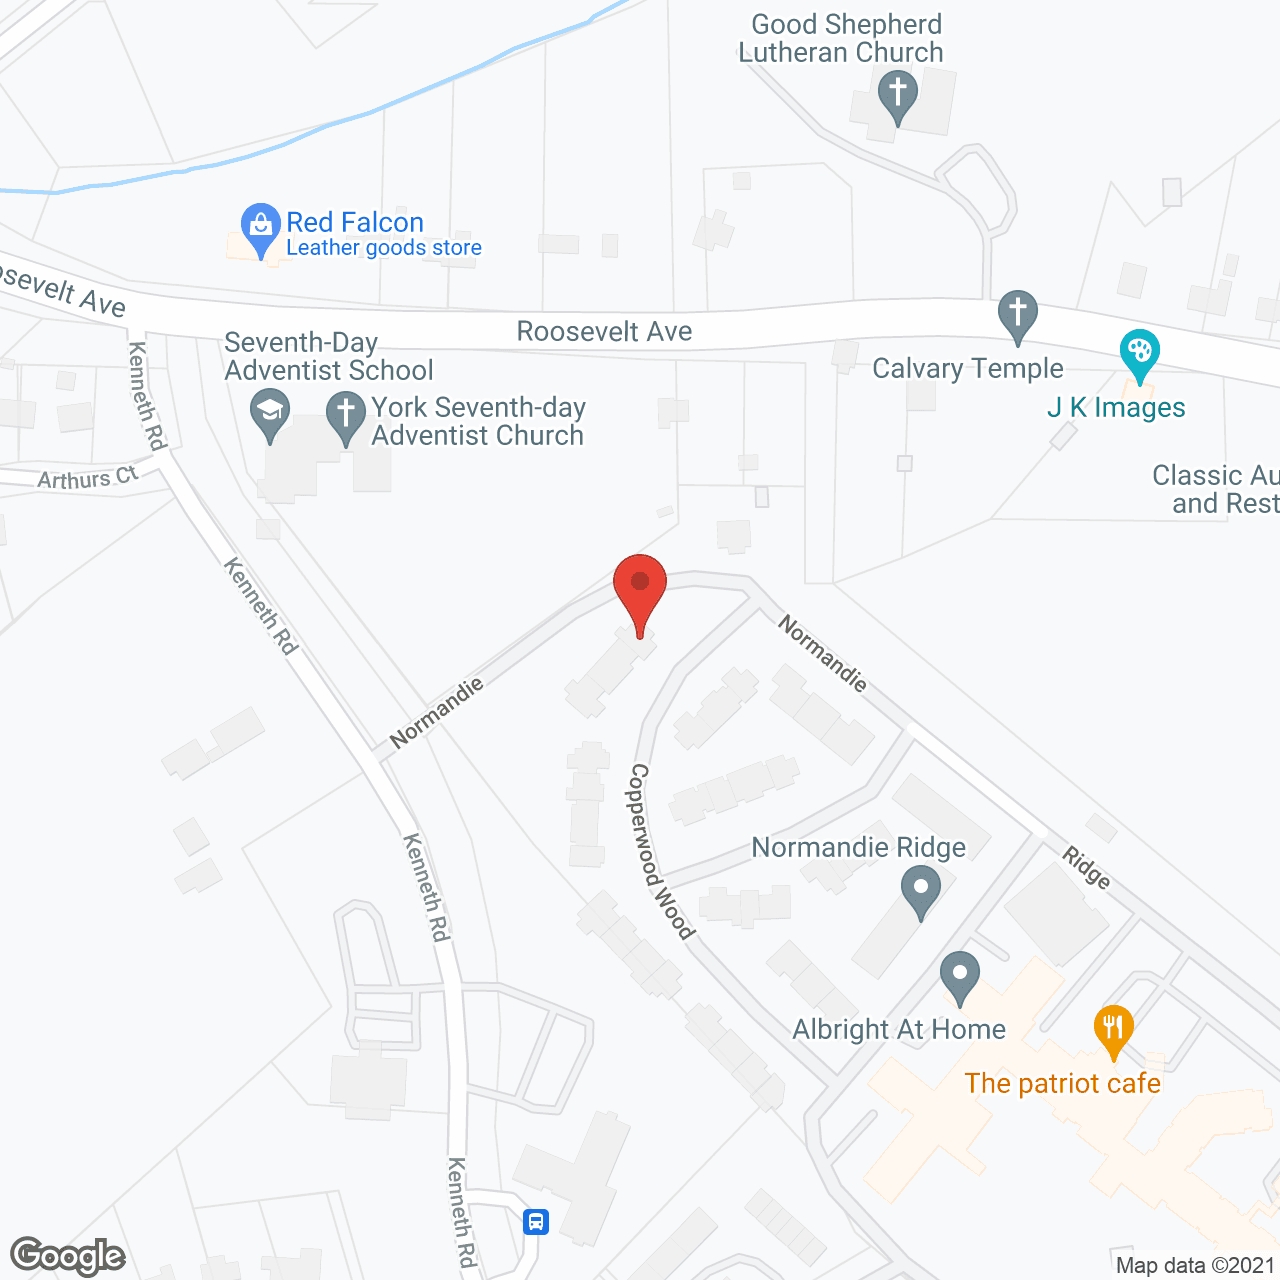 Normandie Ridge in google map